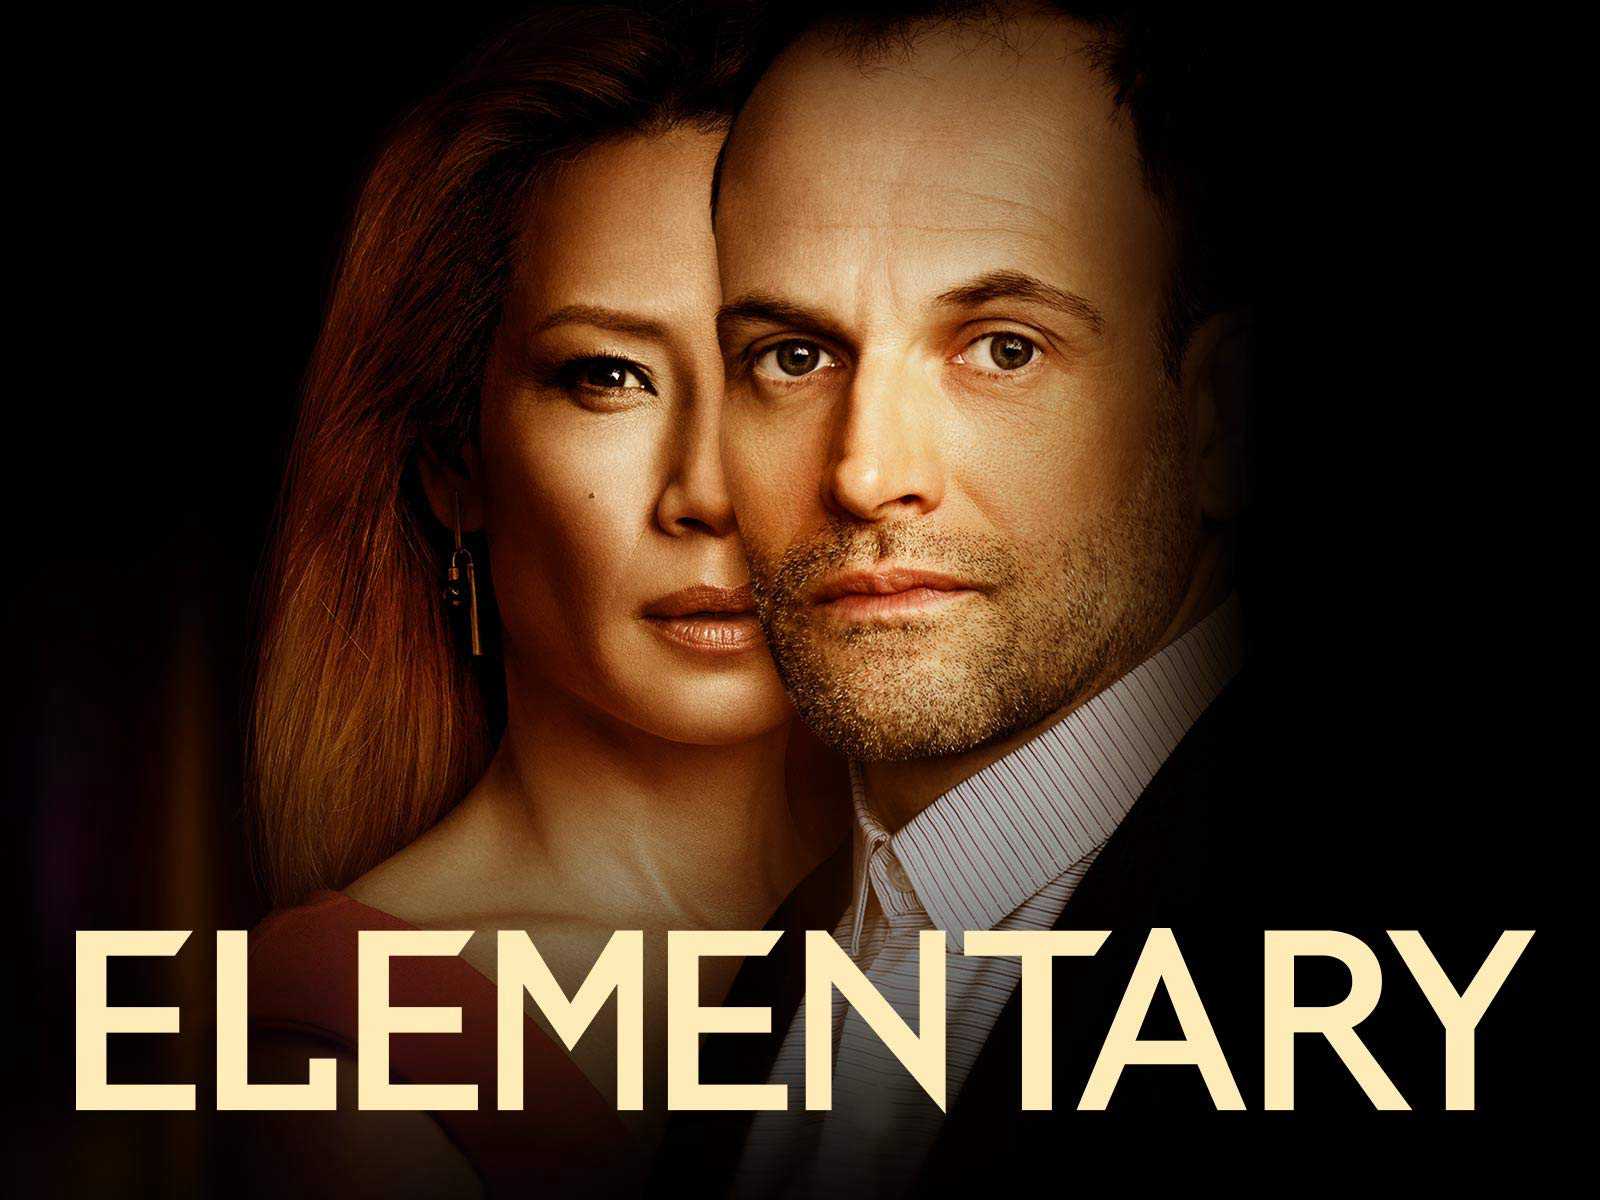 Elementary (Season 7) / Elementary (Season 7) (2019)